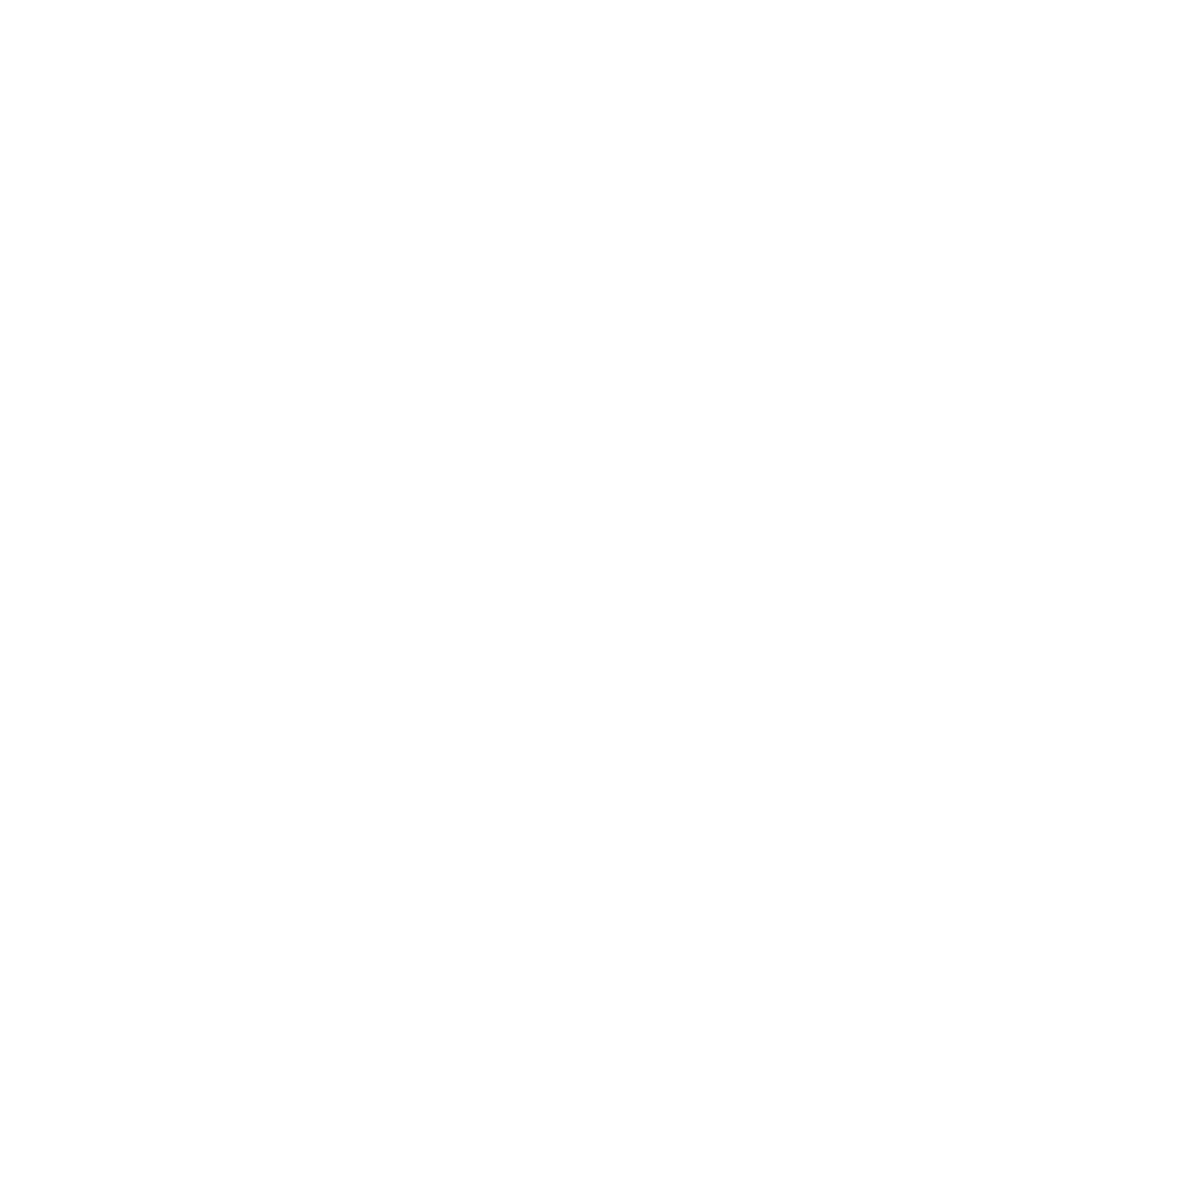 governance media brand